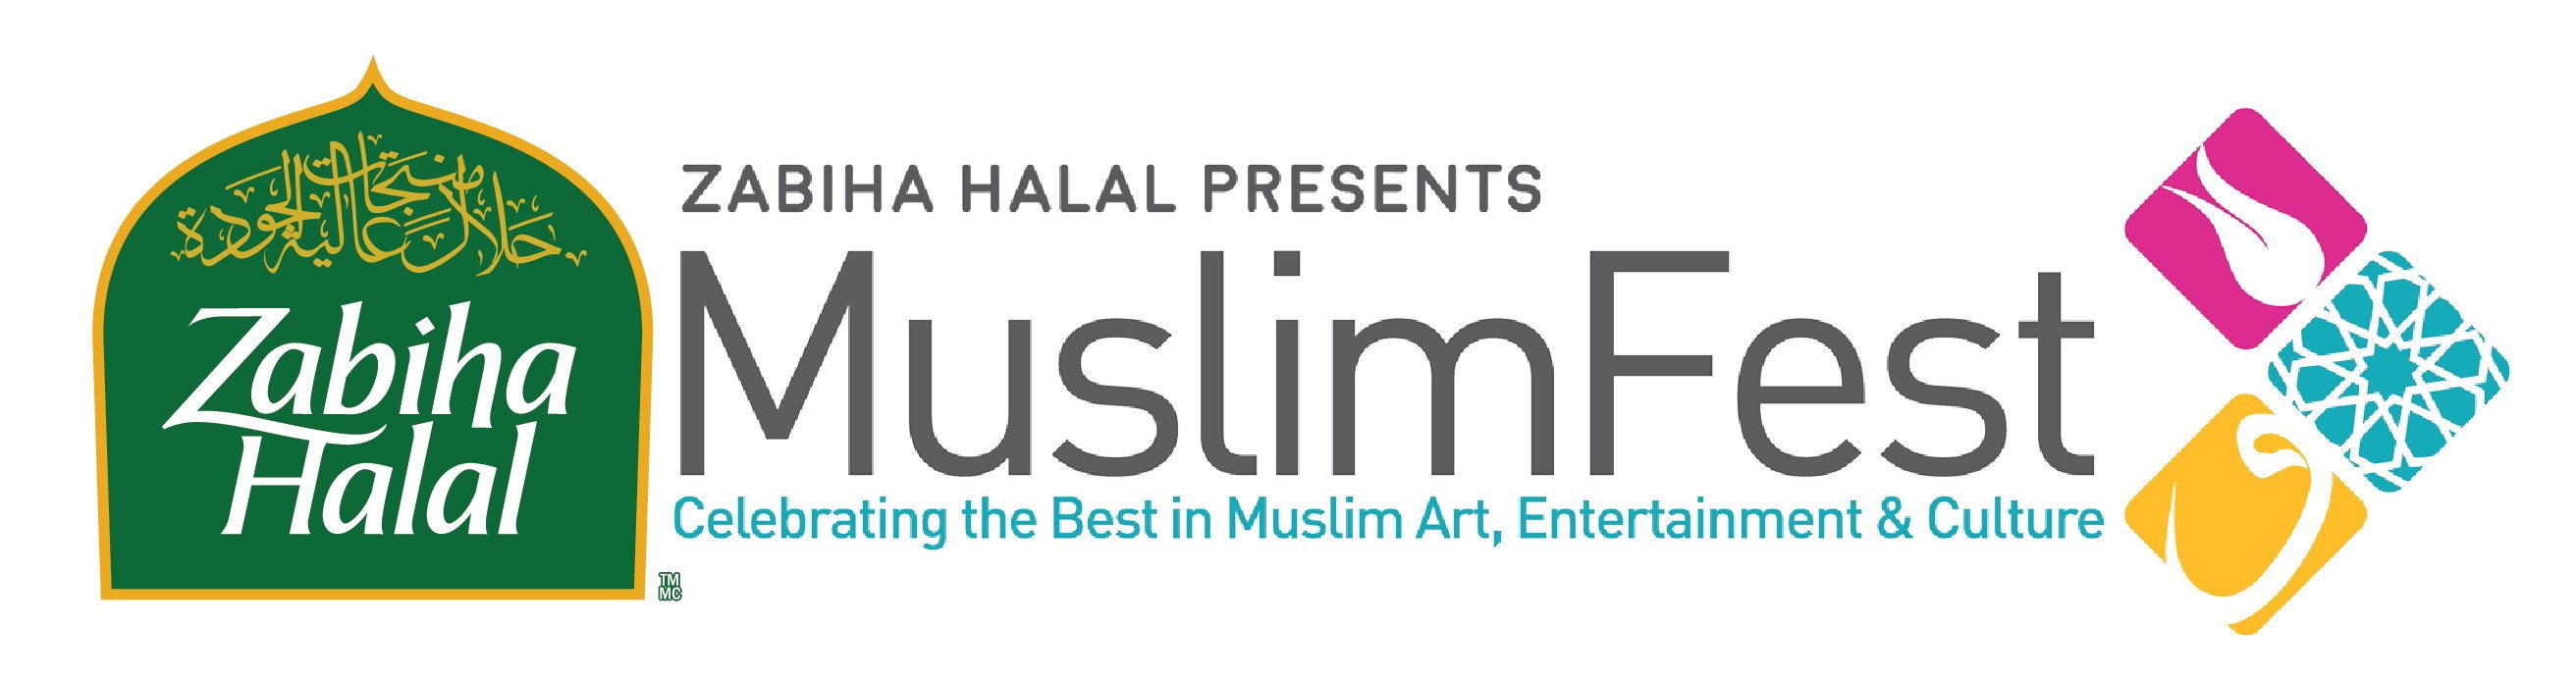 MuslimFest Google image from http://muslimfest.com/